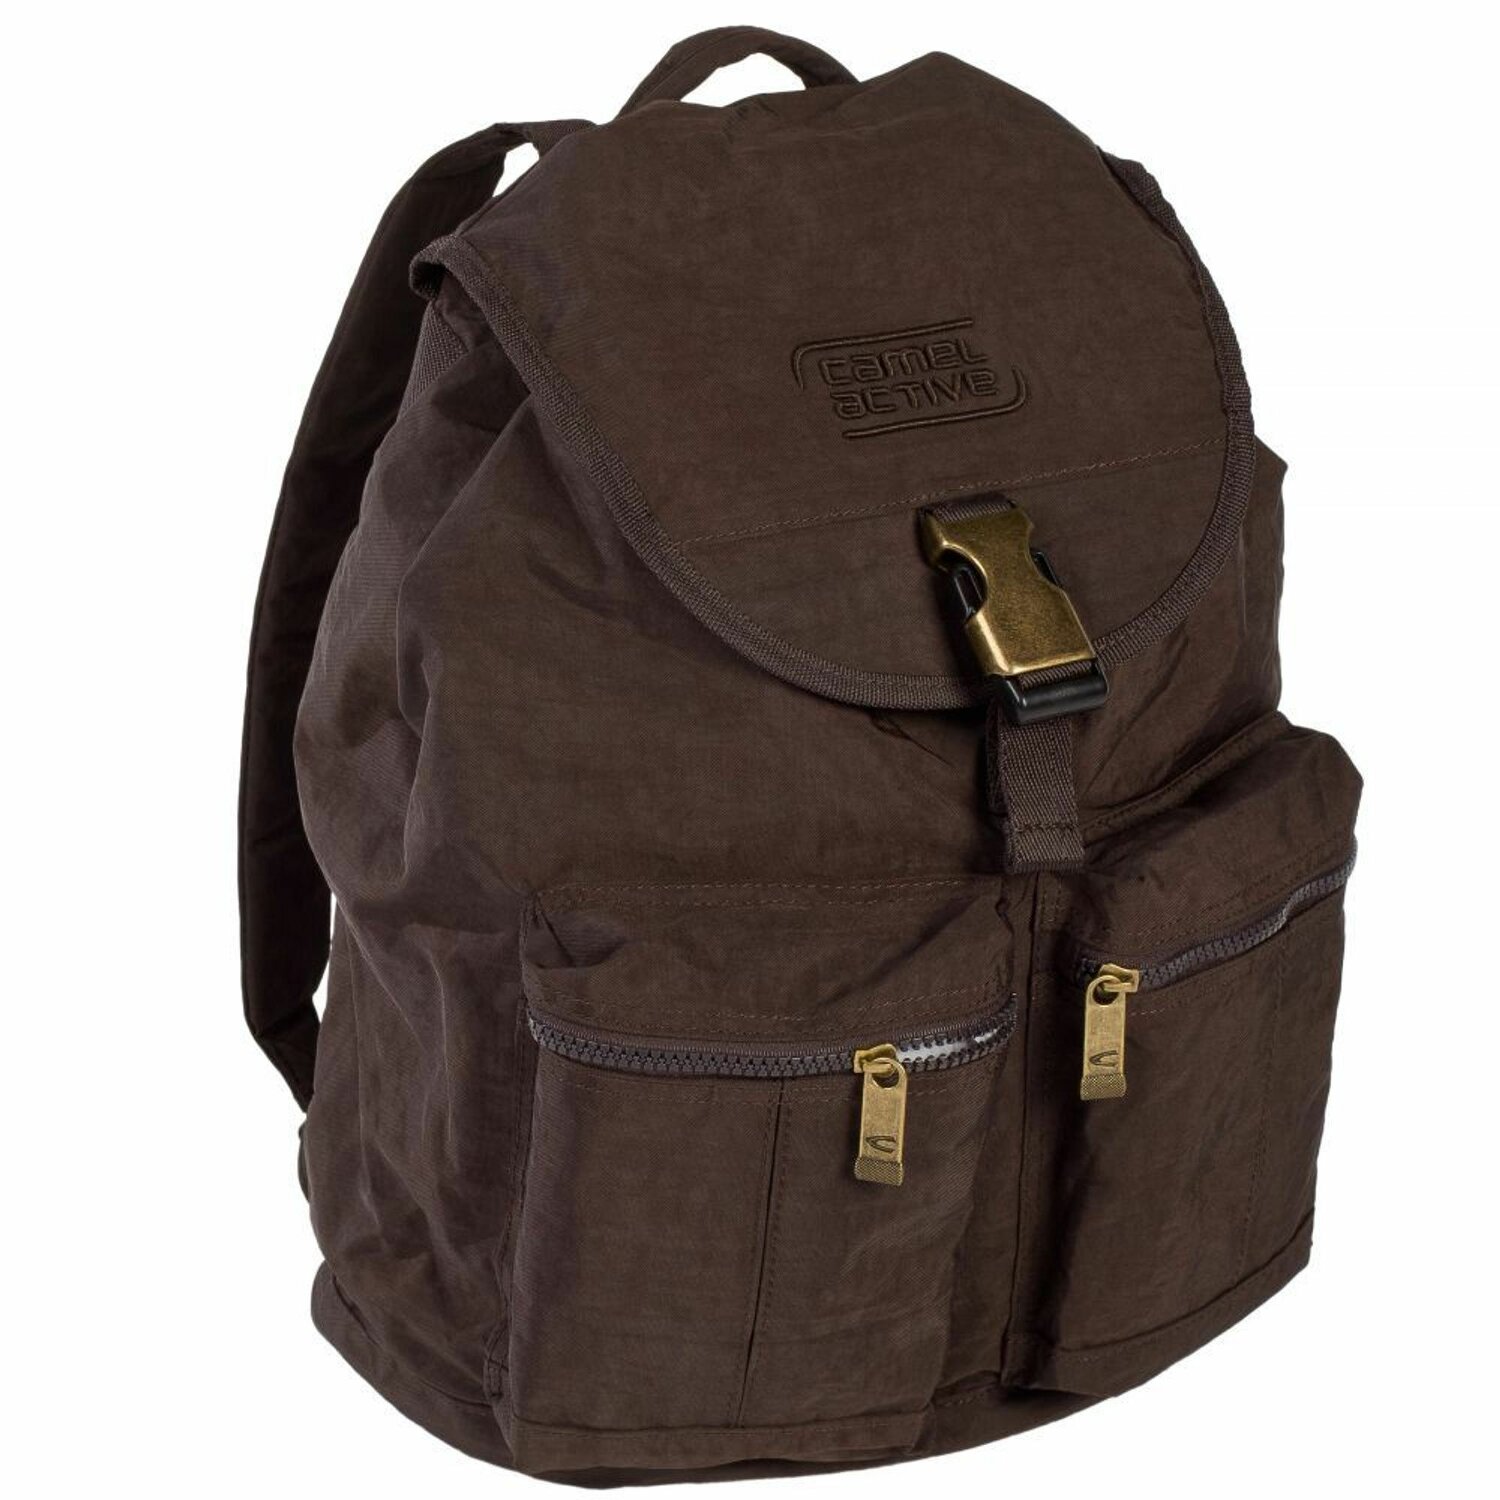 Camel Active Journey backpack mochila mochila viaje marrón Brown